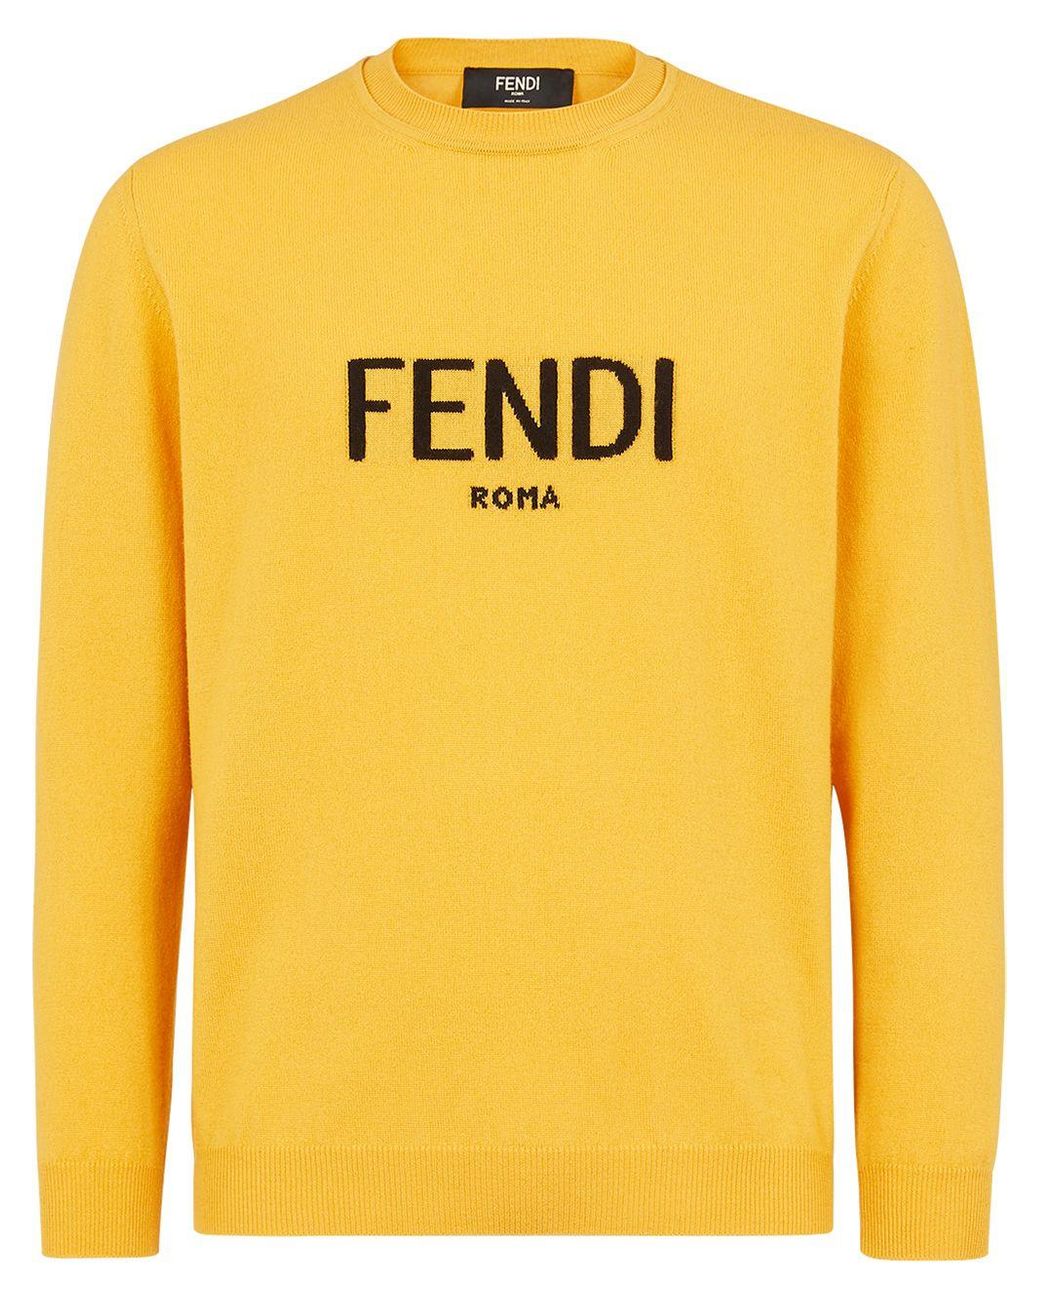 Fendi Cashmere Logo Crew Neck Jumper in Yellow for Men - Lyst